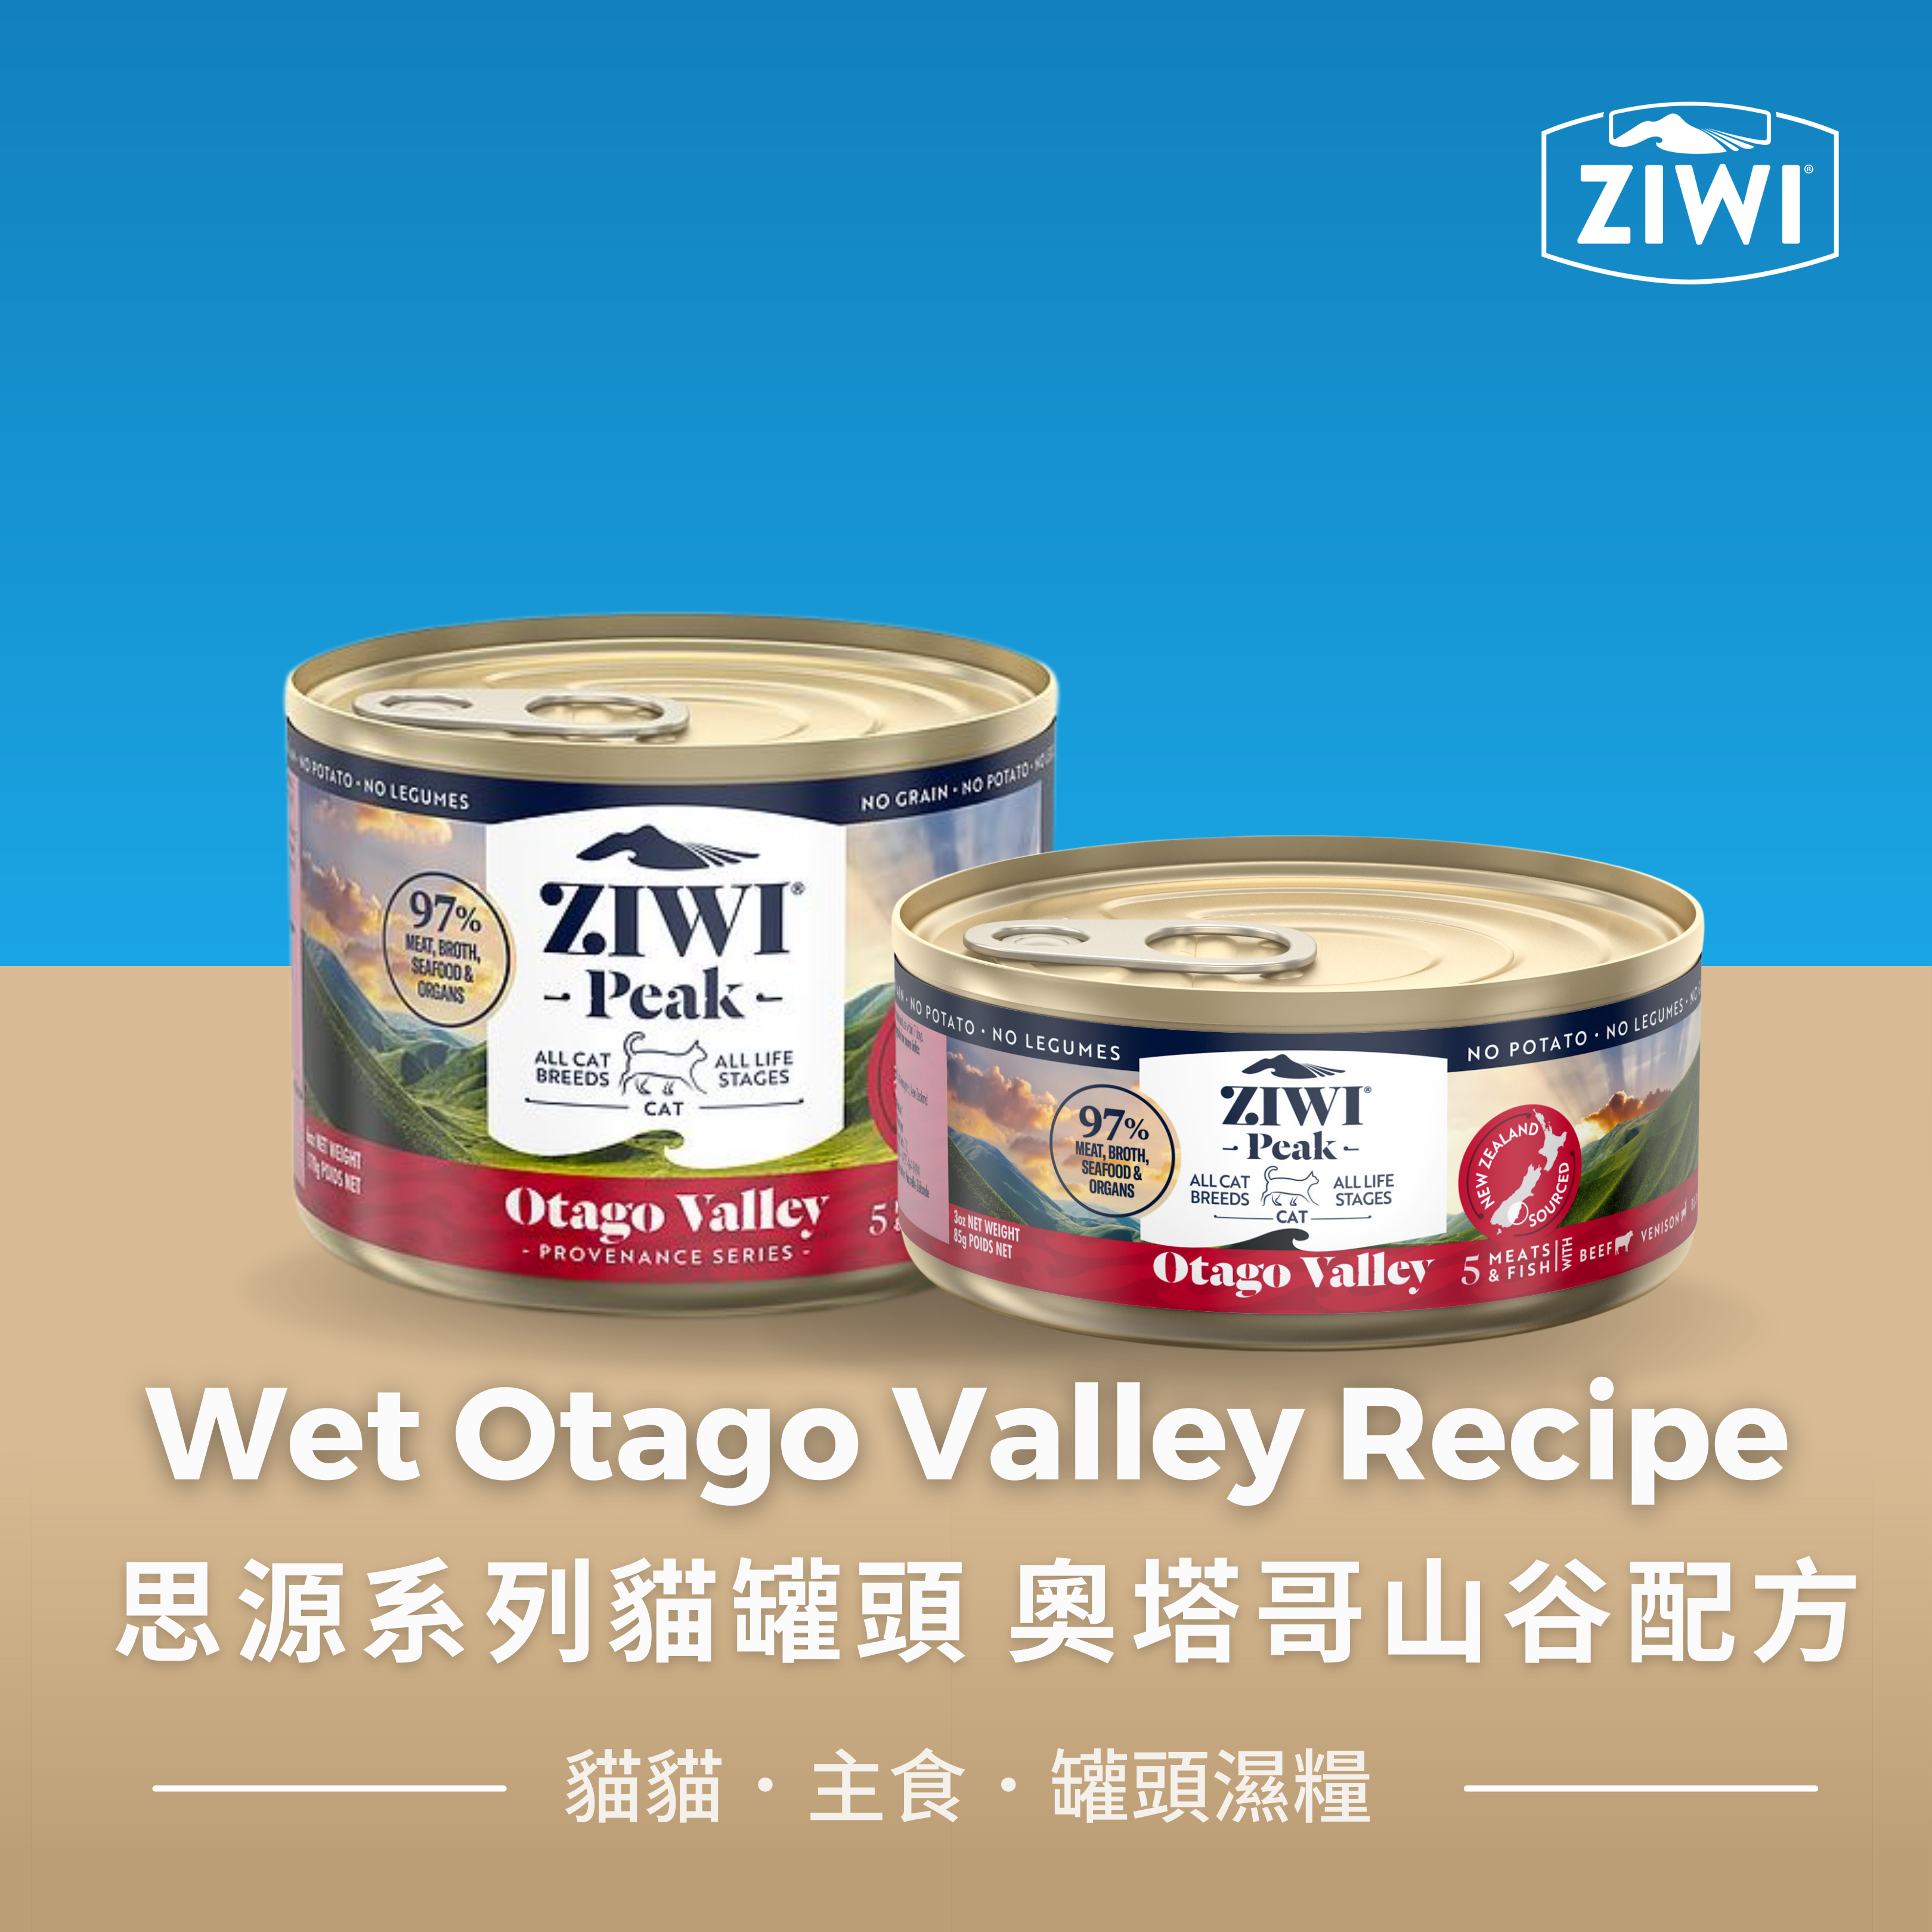 Wet Otago Valley Recipe for Cats 思源系列貓罐頭 - 奧塔哥山谷配方 (6罐)